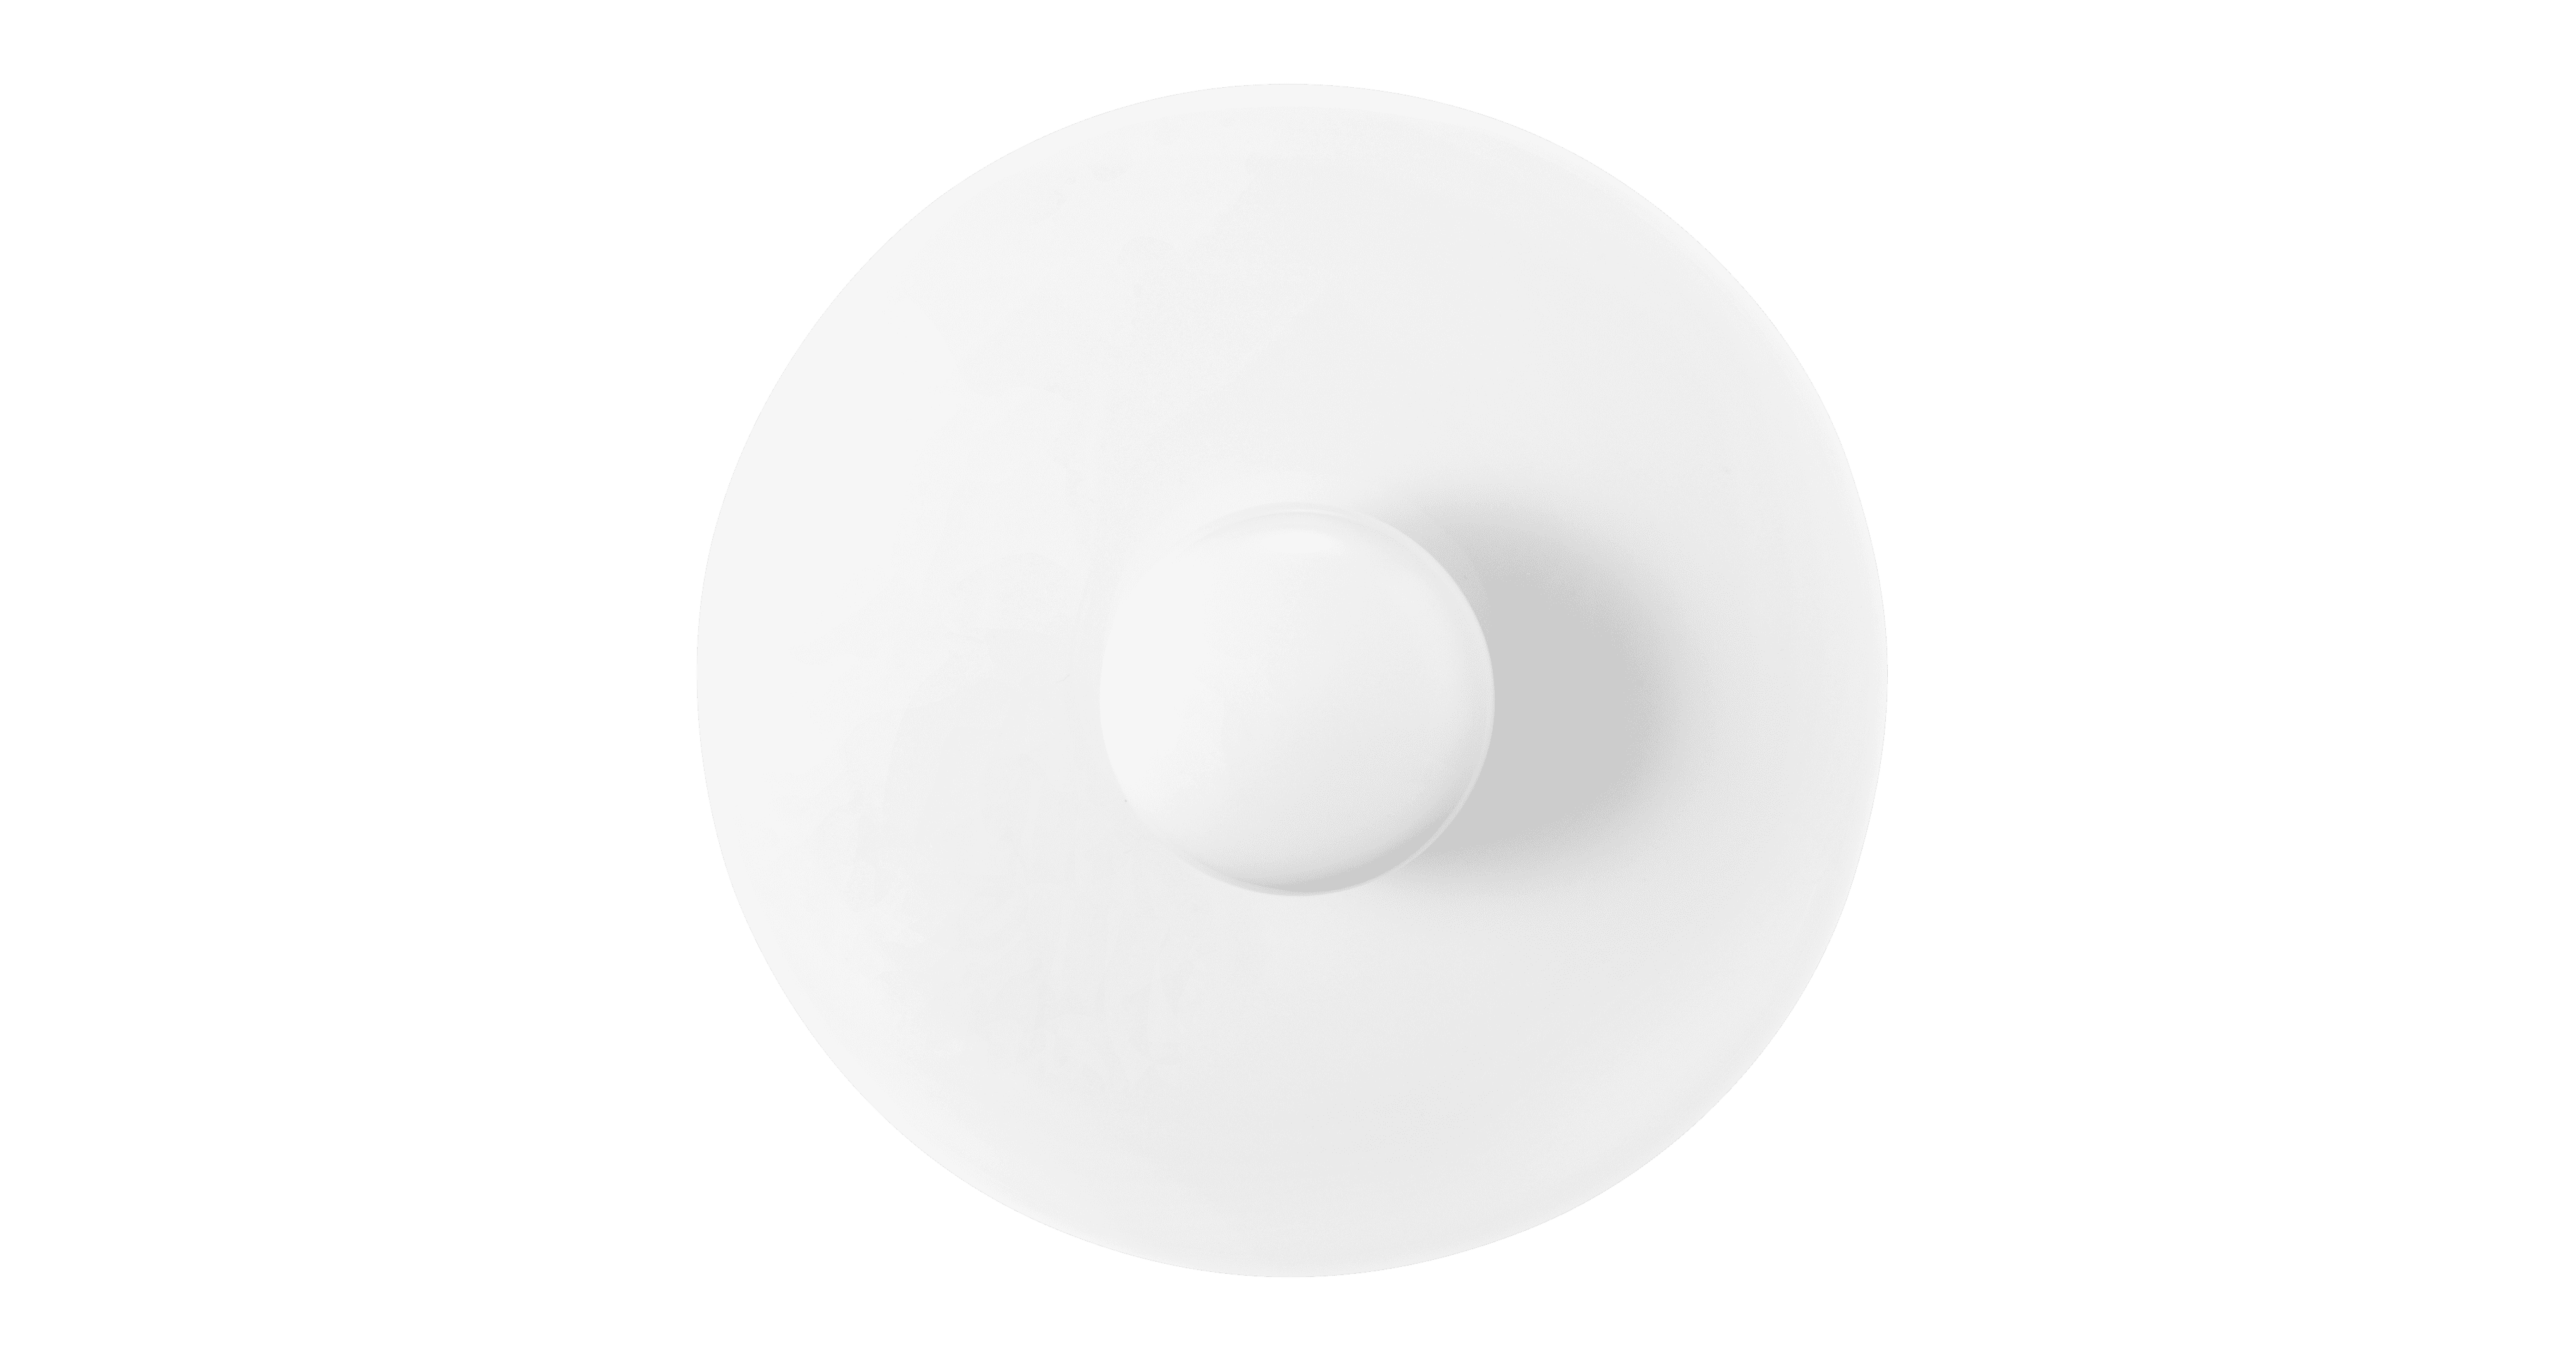 Seltmann Porzellan Liberty Weiß Deckel zur Kanne 1,60 l